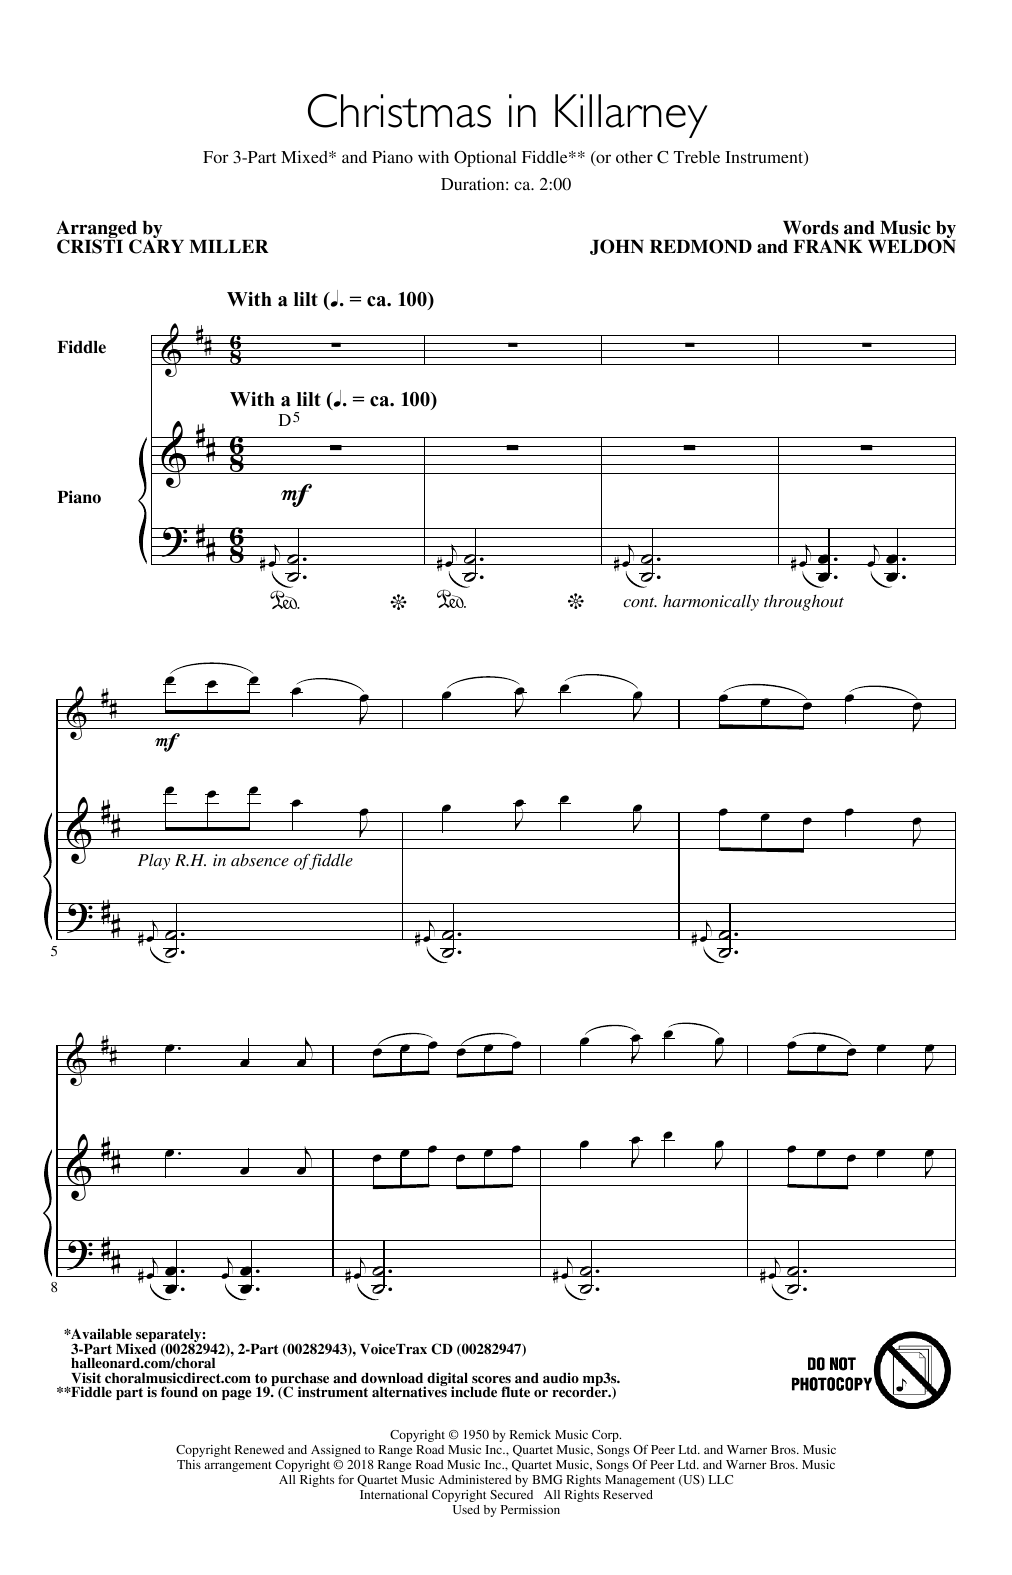 John Redmond & Frank Weldon Christmas In Killarney (arr. Cristi Cary Miller) Sheet Music Notes & Chords for 2-Part Choir - Download or Print PDF